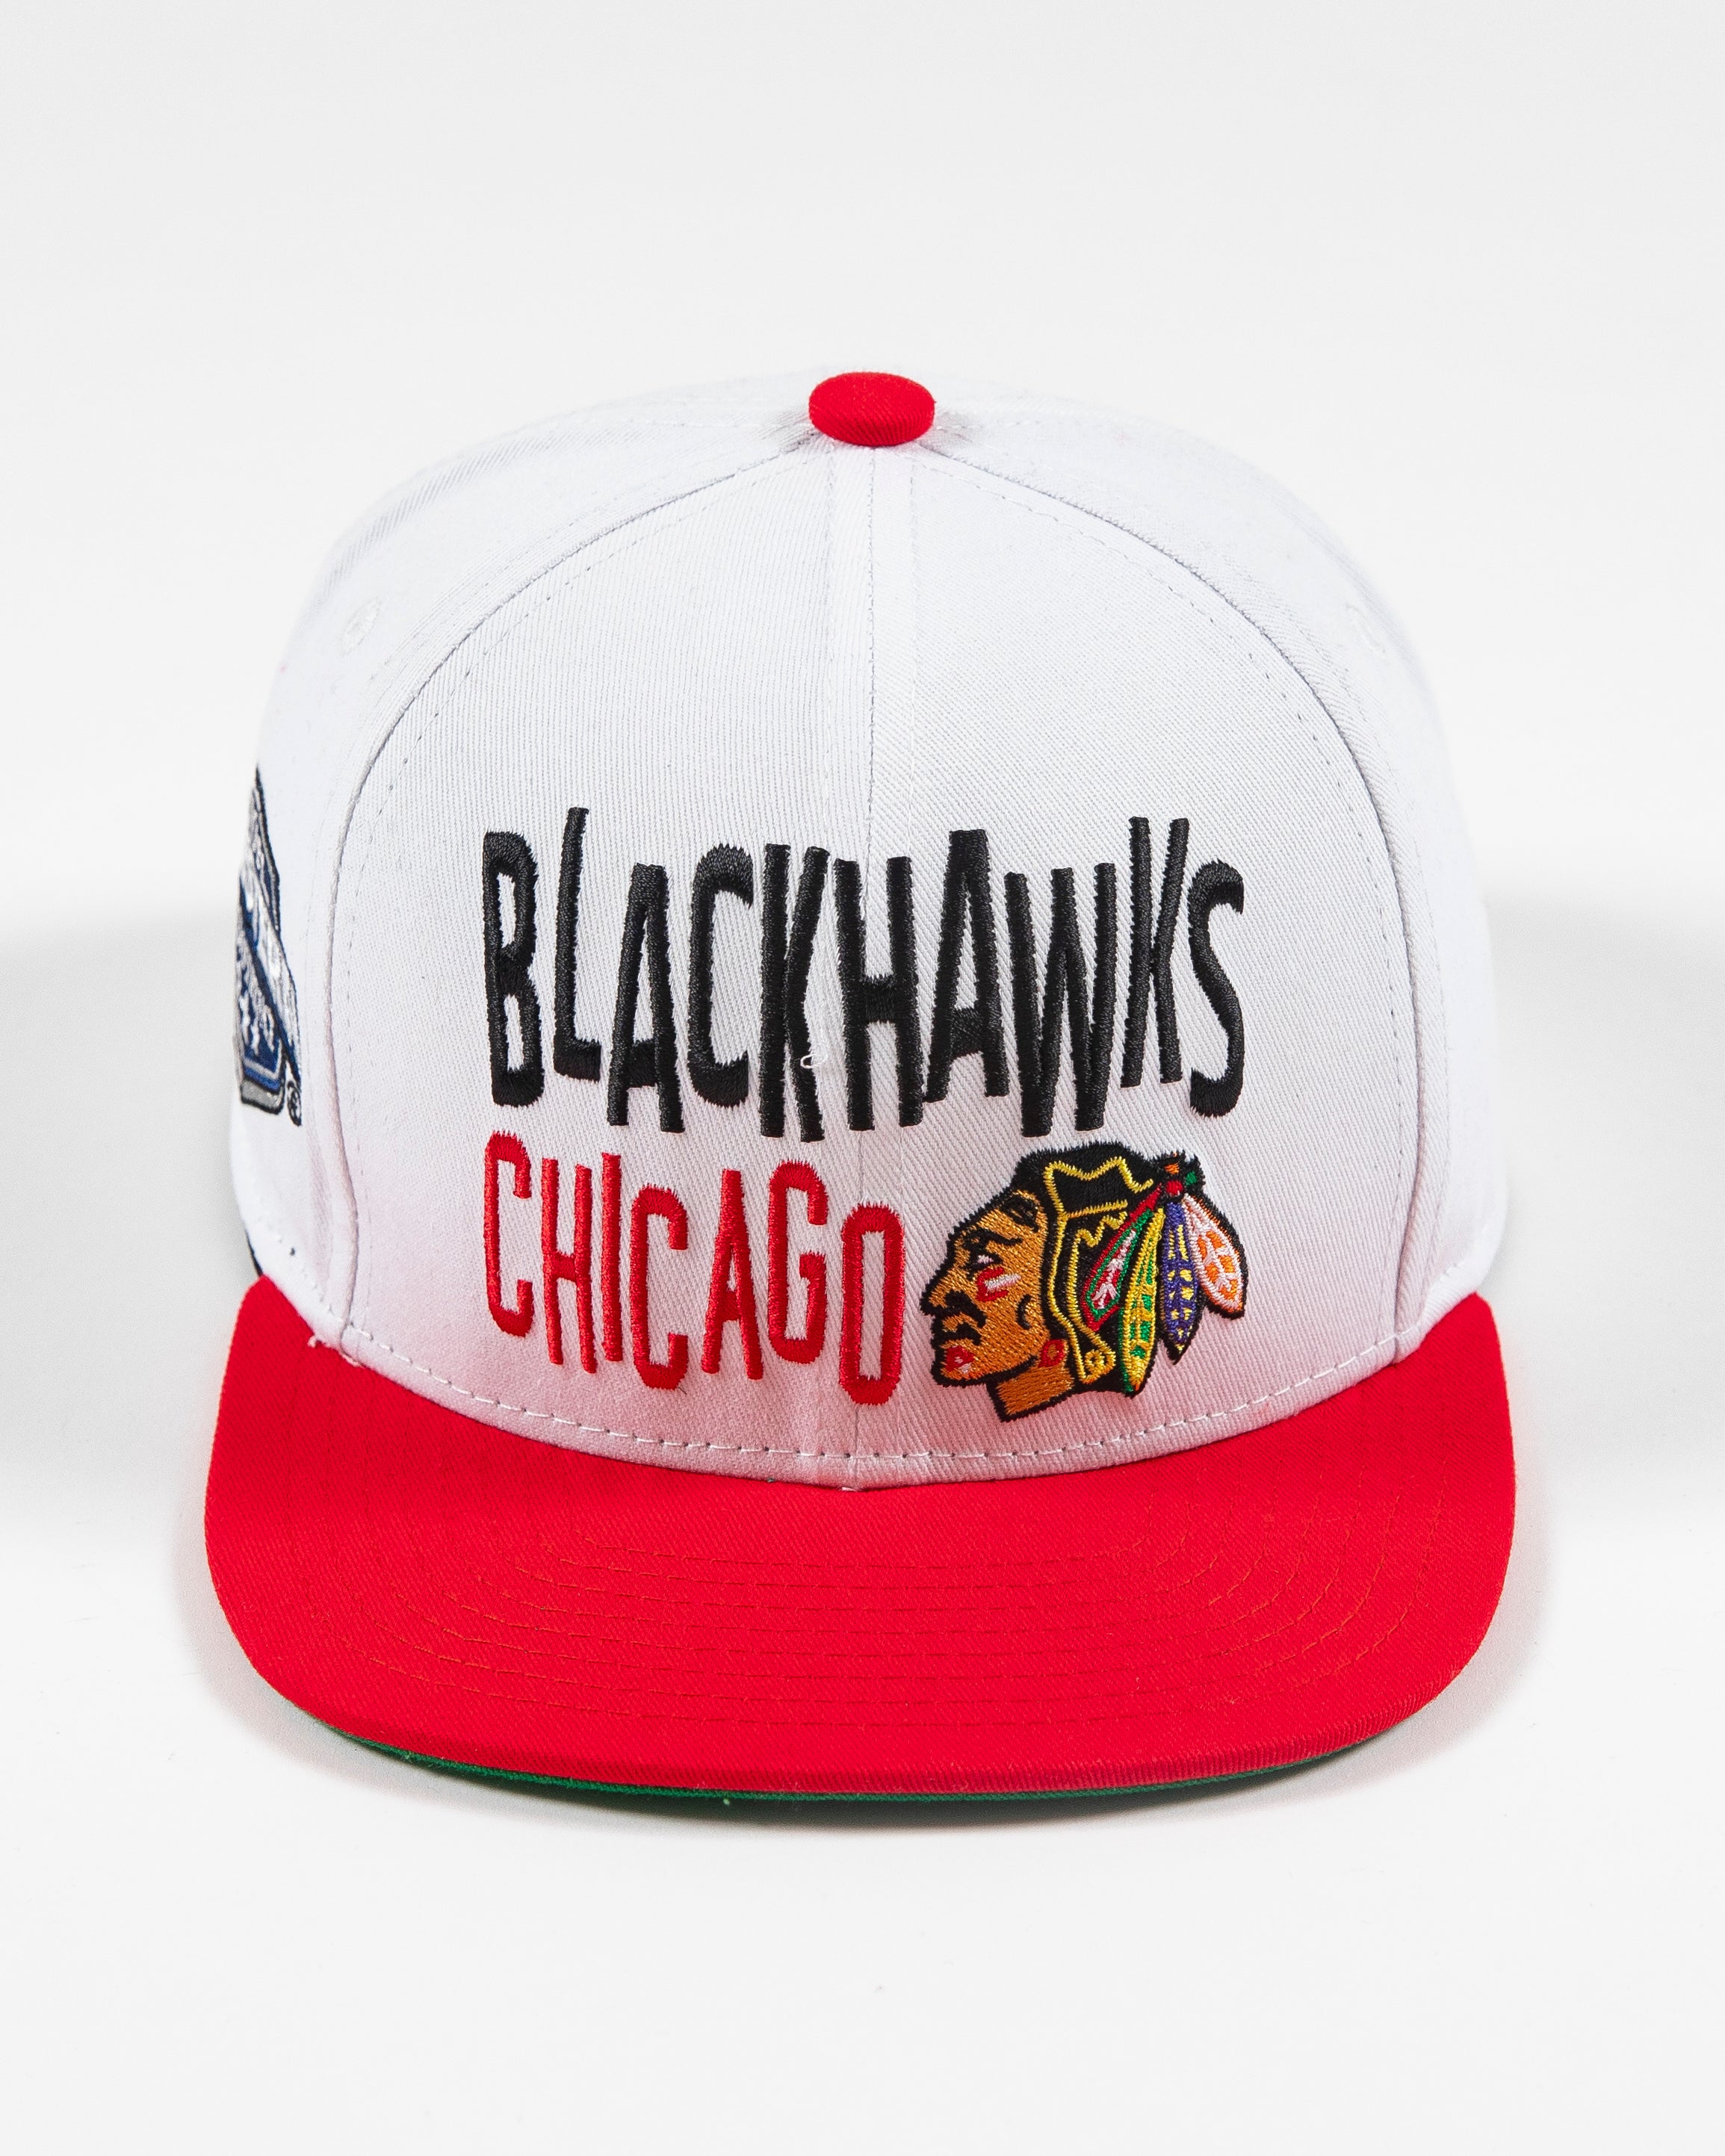 Chicago Bulls Mitchell & Ness Toss Up Snapback Vintage Hat